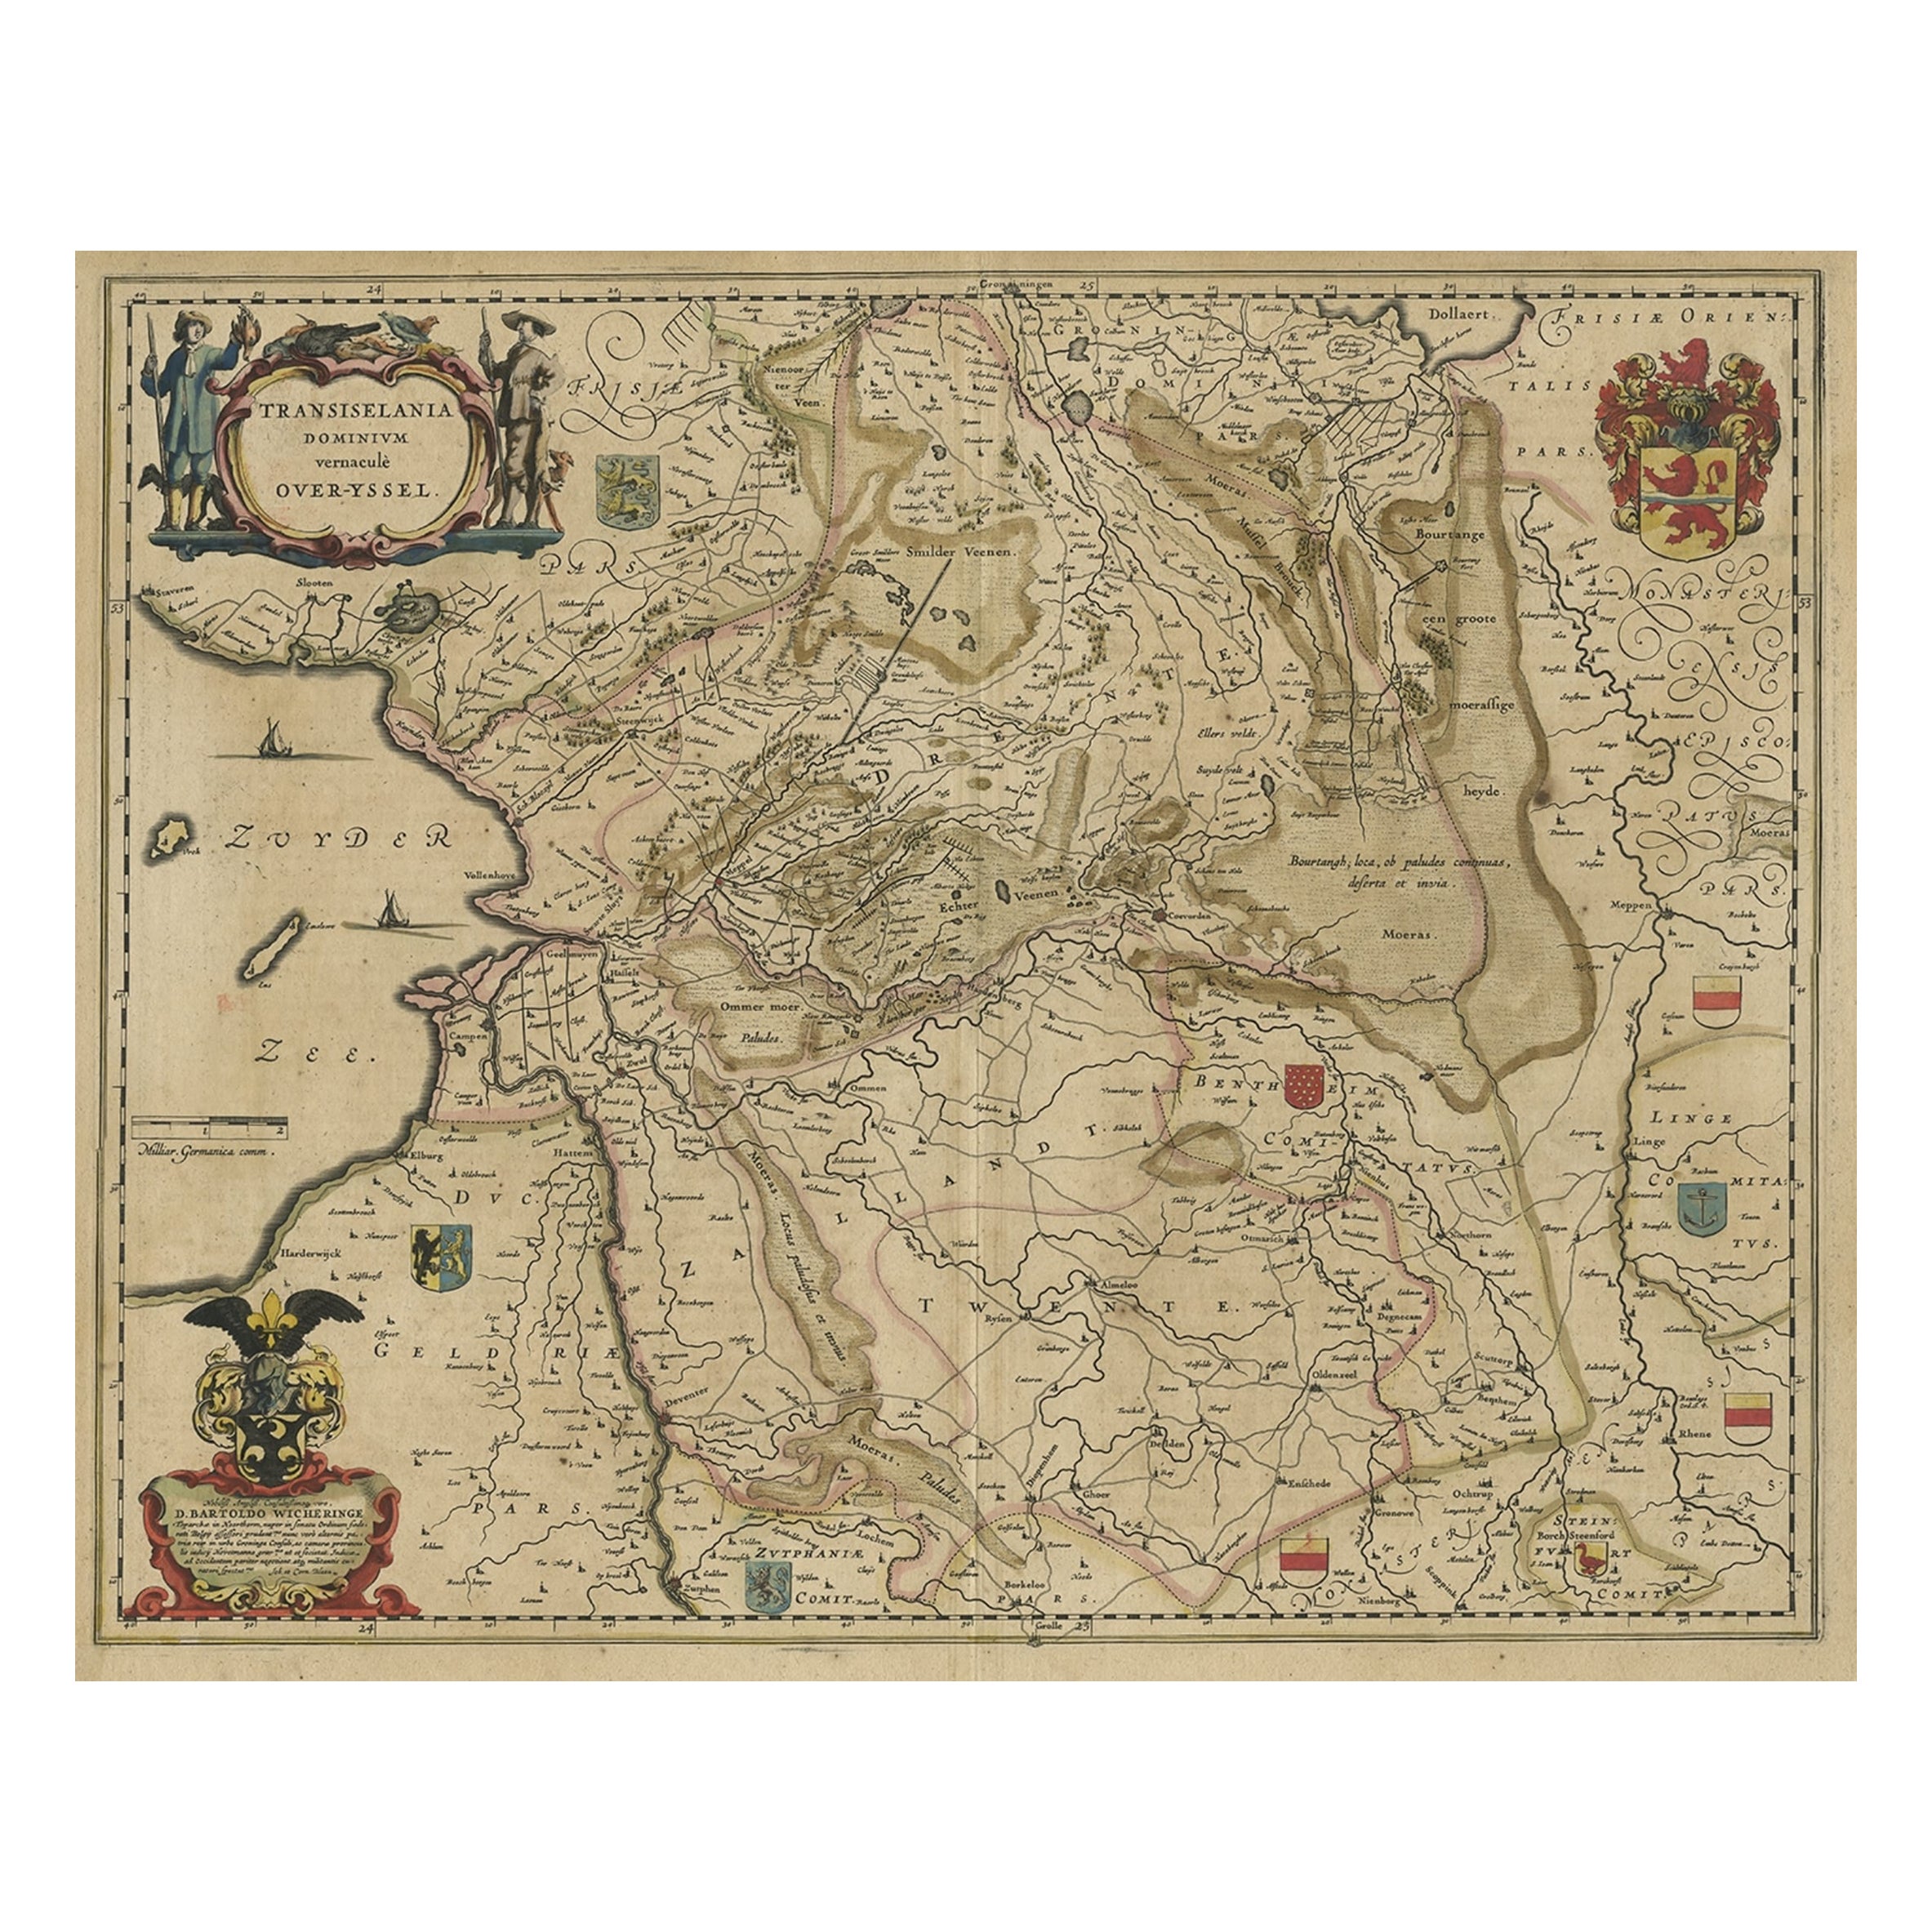 Original Antique Map of the Dutch Provinces of Overijssel and Drenthe, 1635